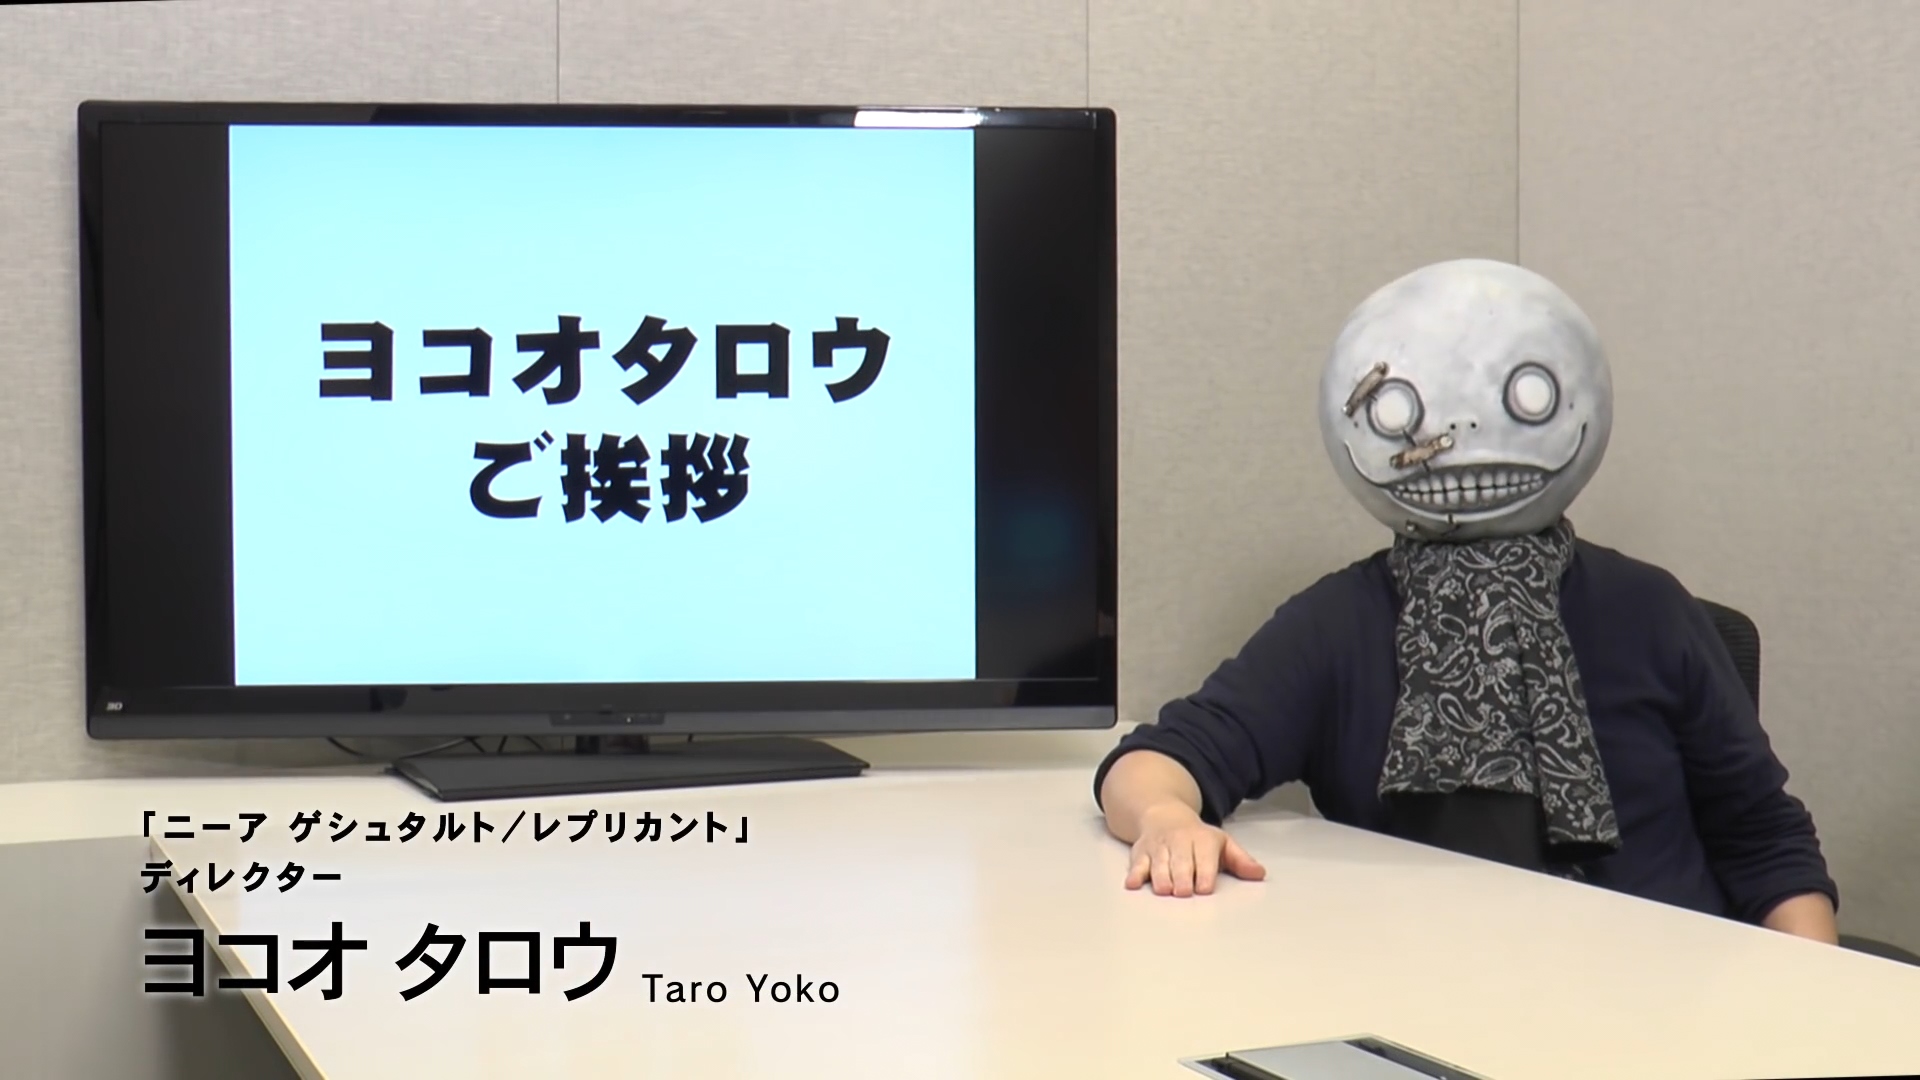 Atlus Project Zero - Yoko Taro